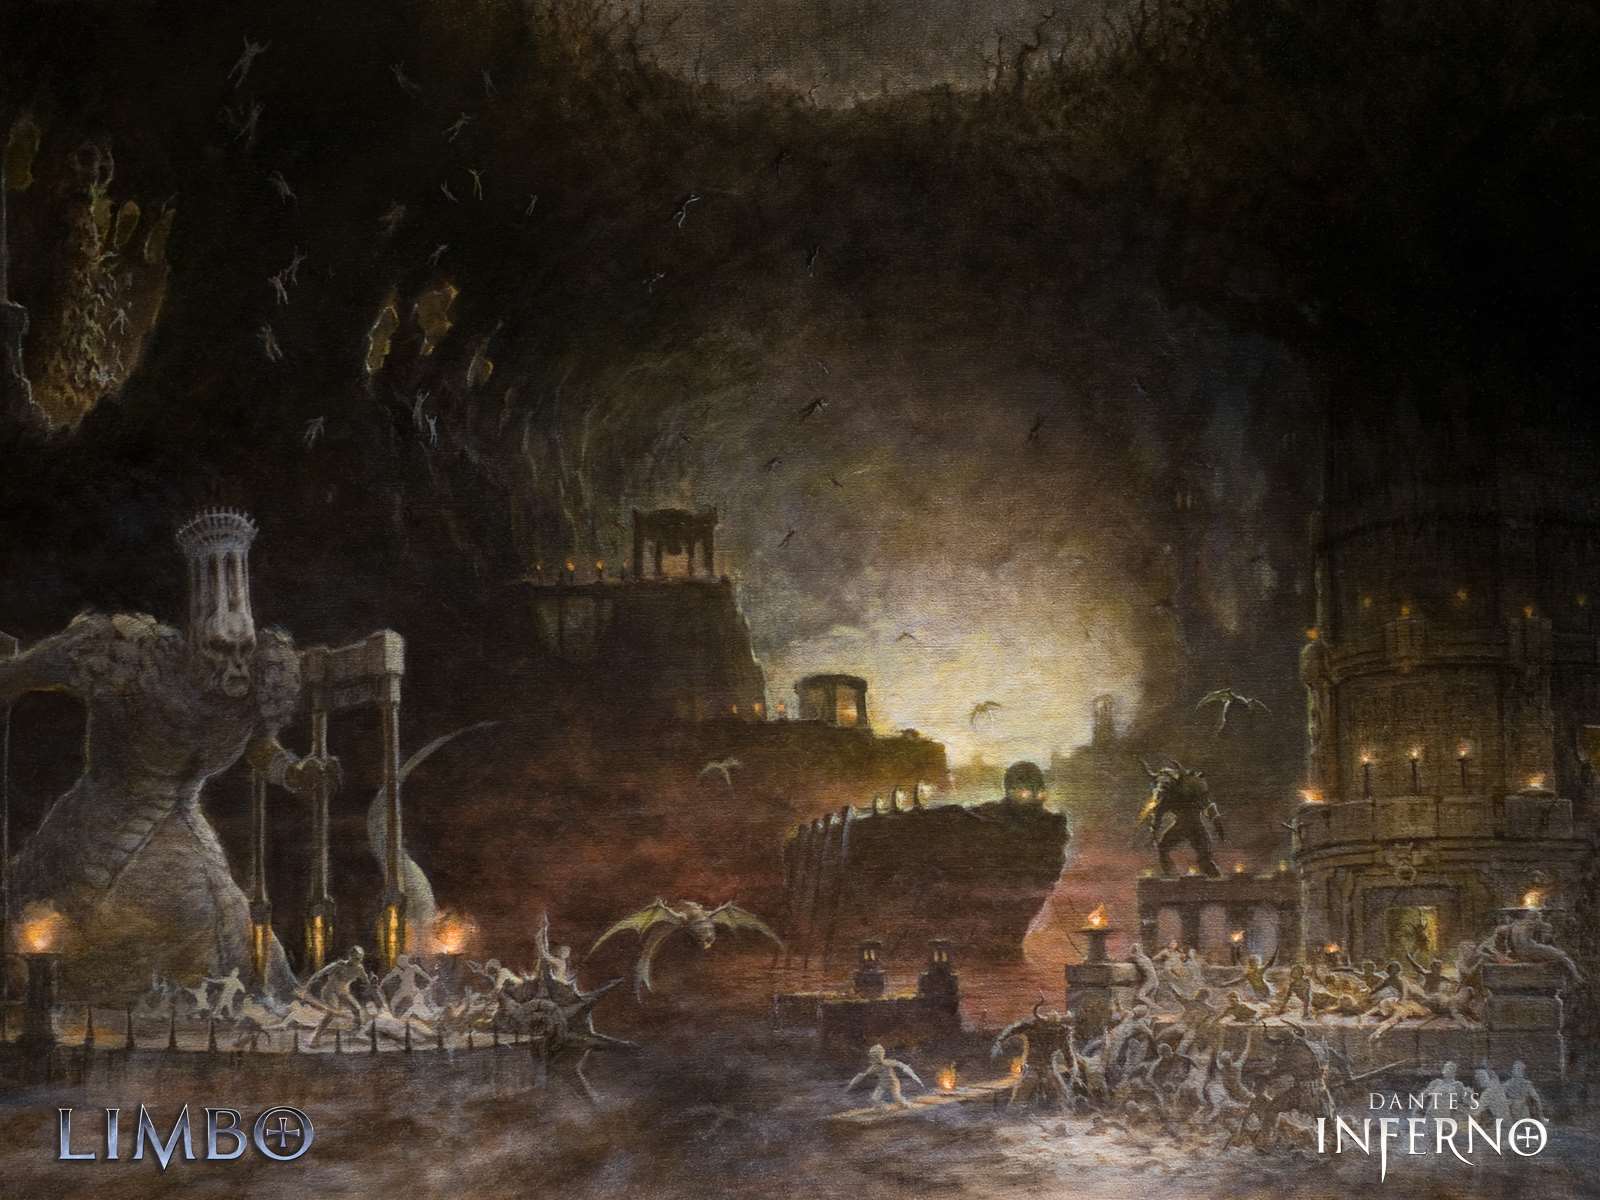 Dantes Inferno wallpapers  Dantes Inferno stock photos